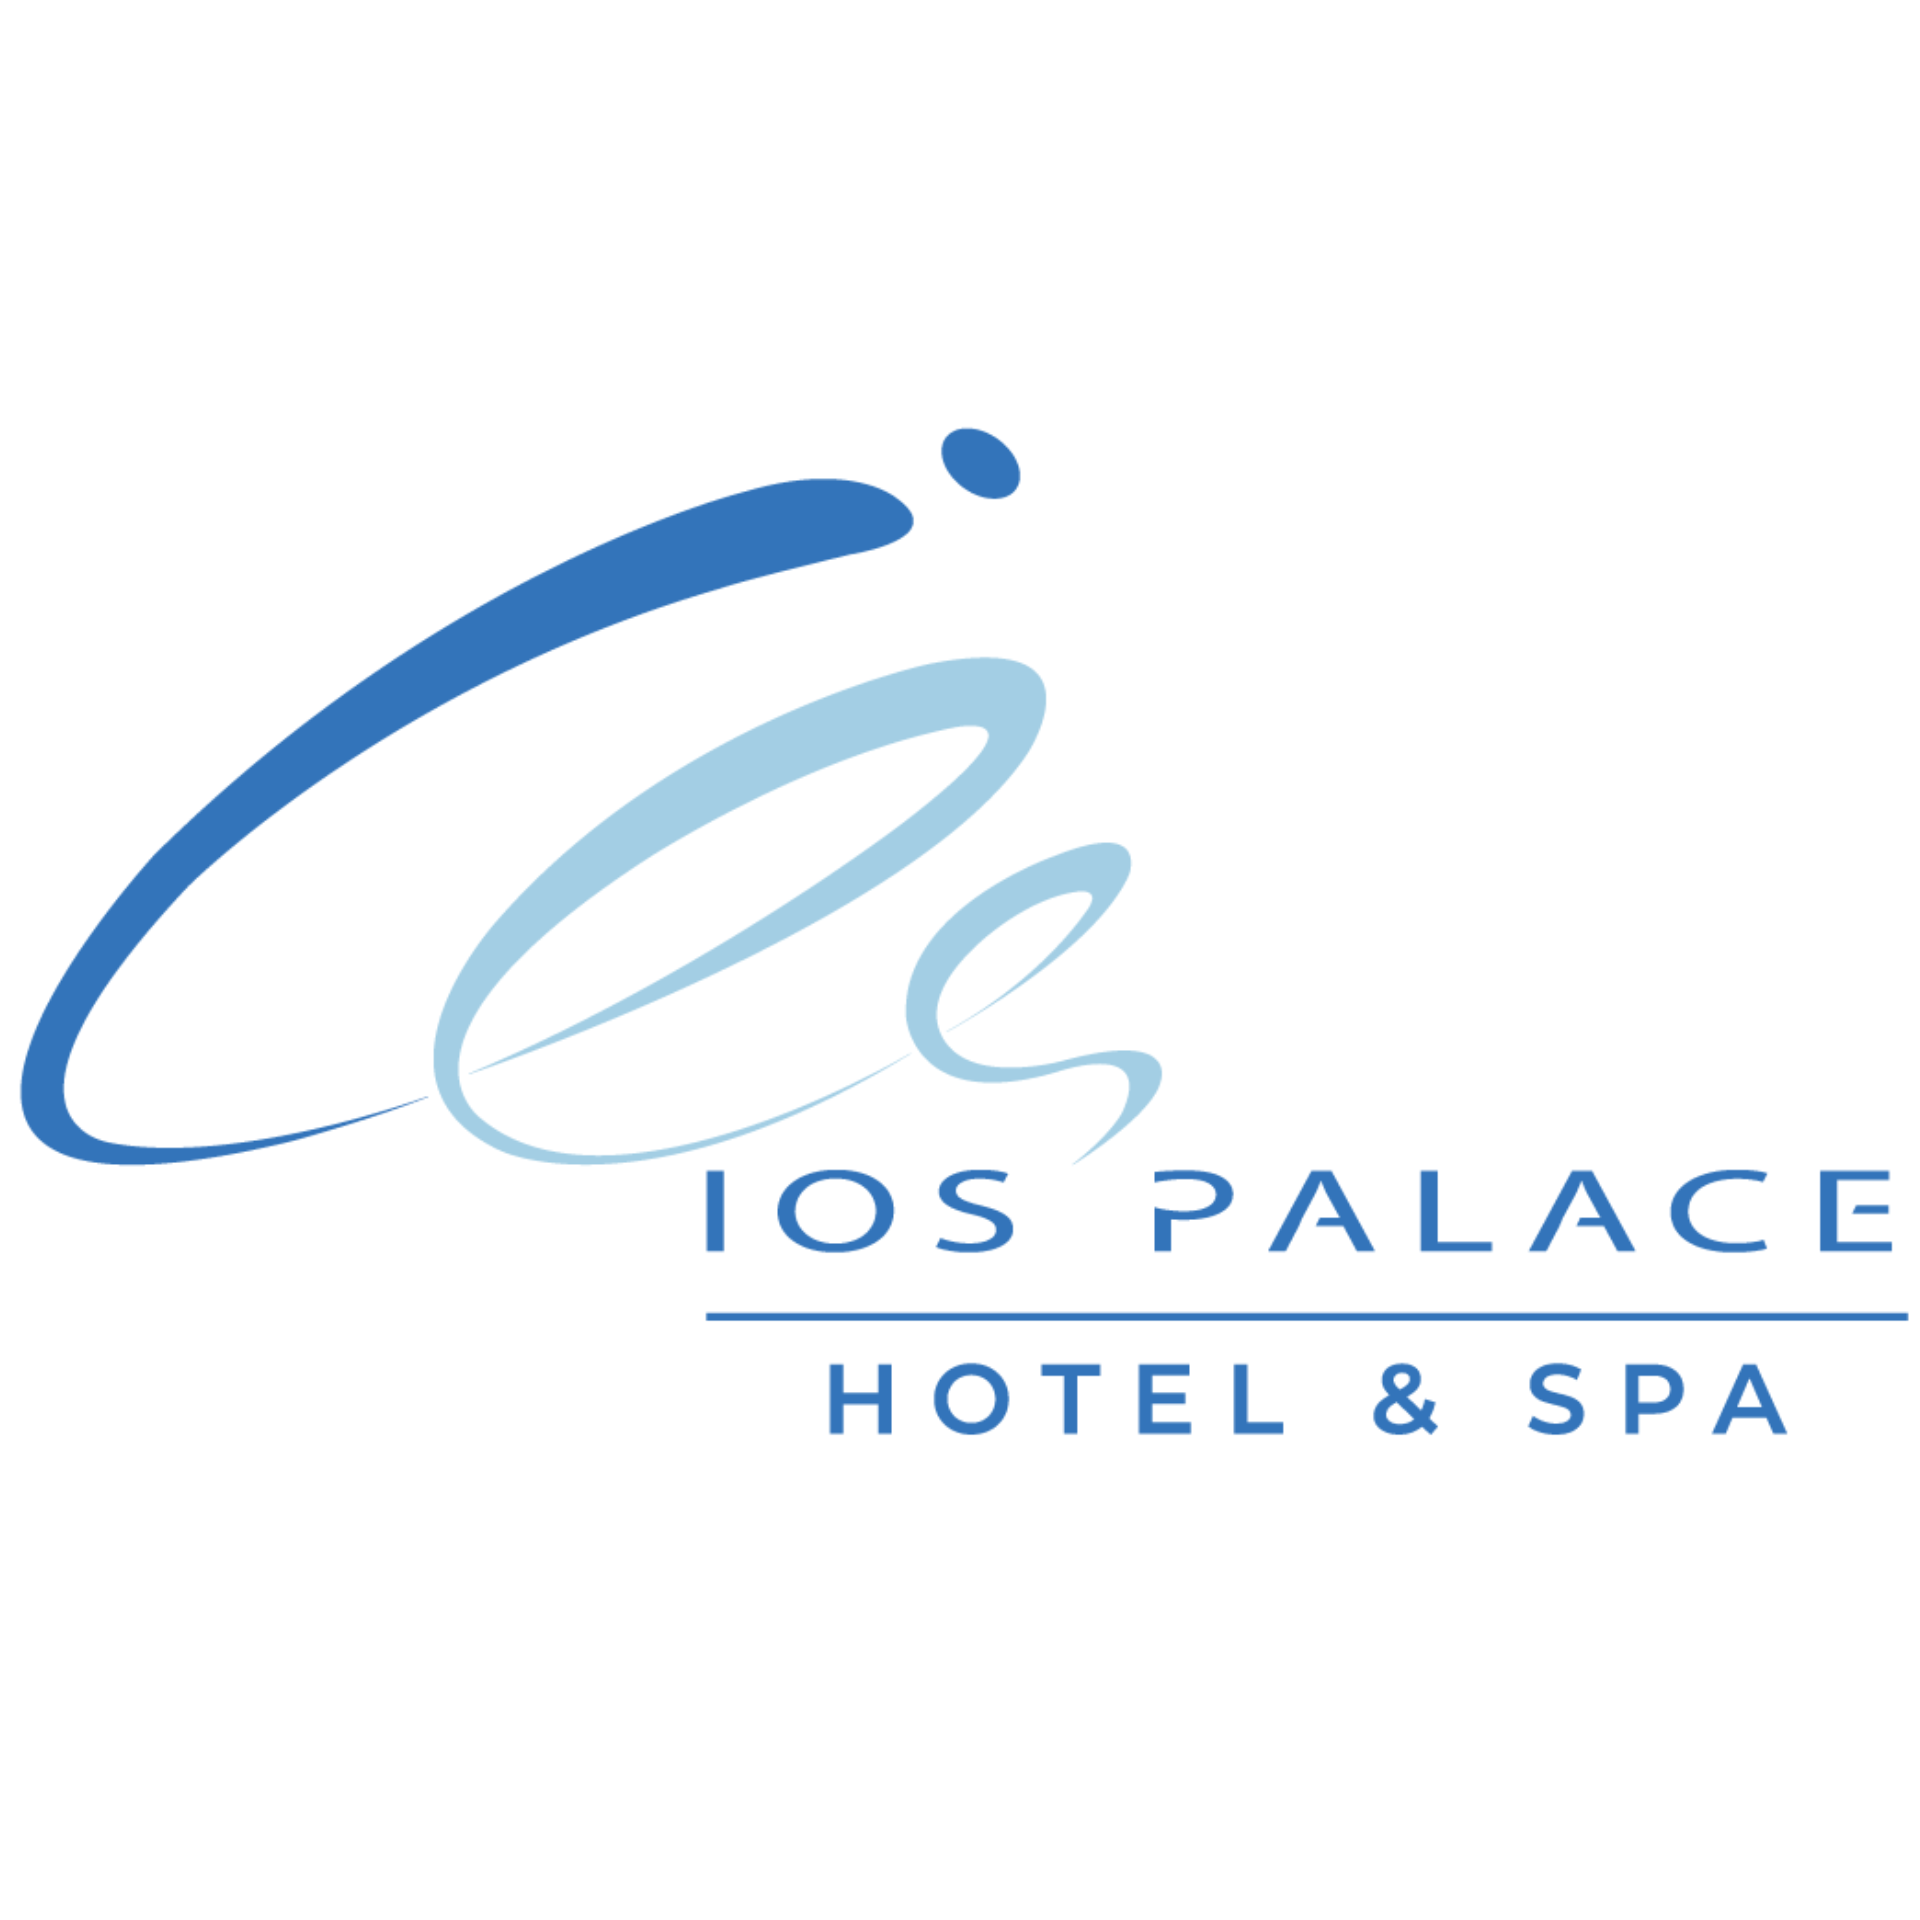 IOS PALACE HOTEL & SPA